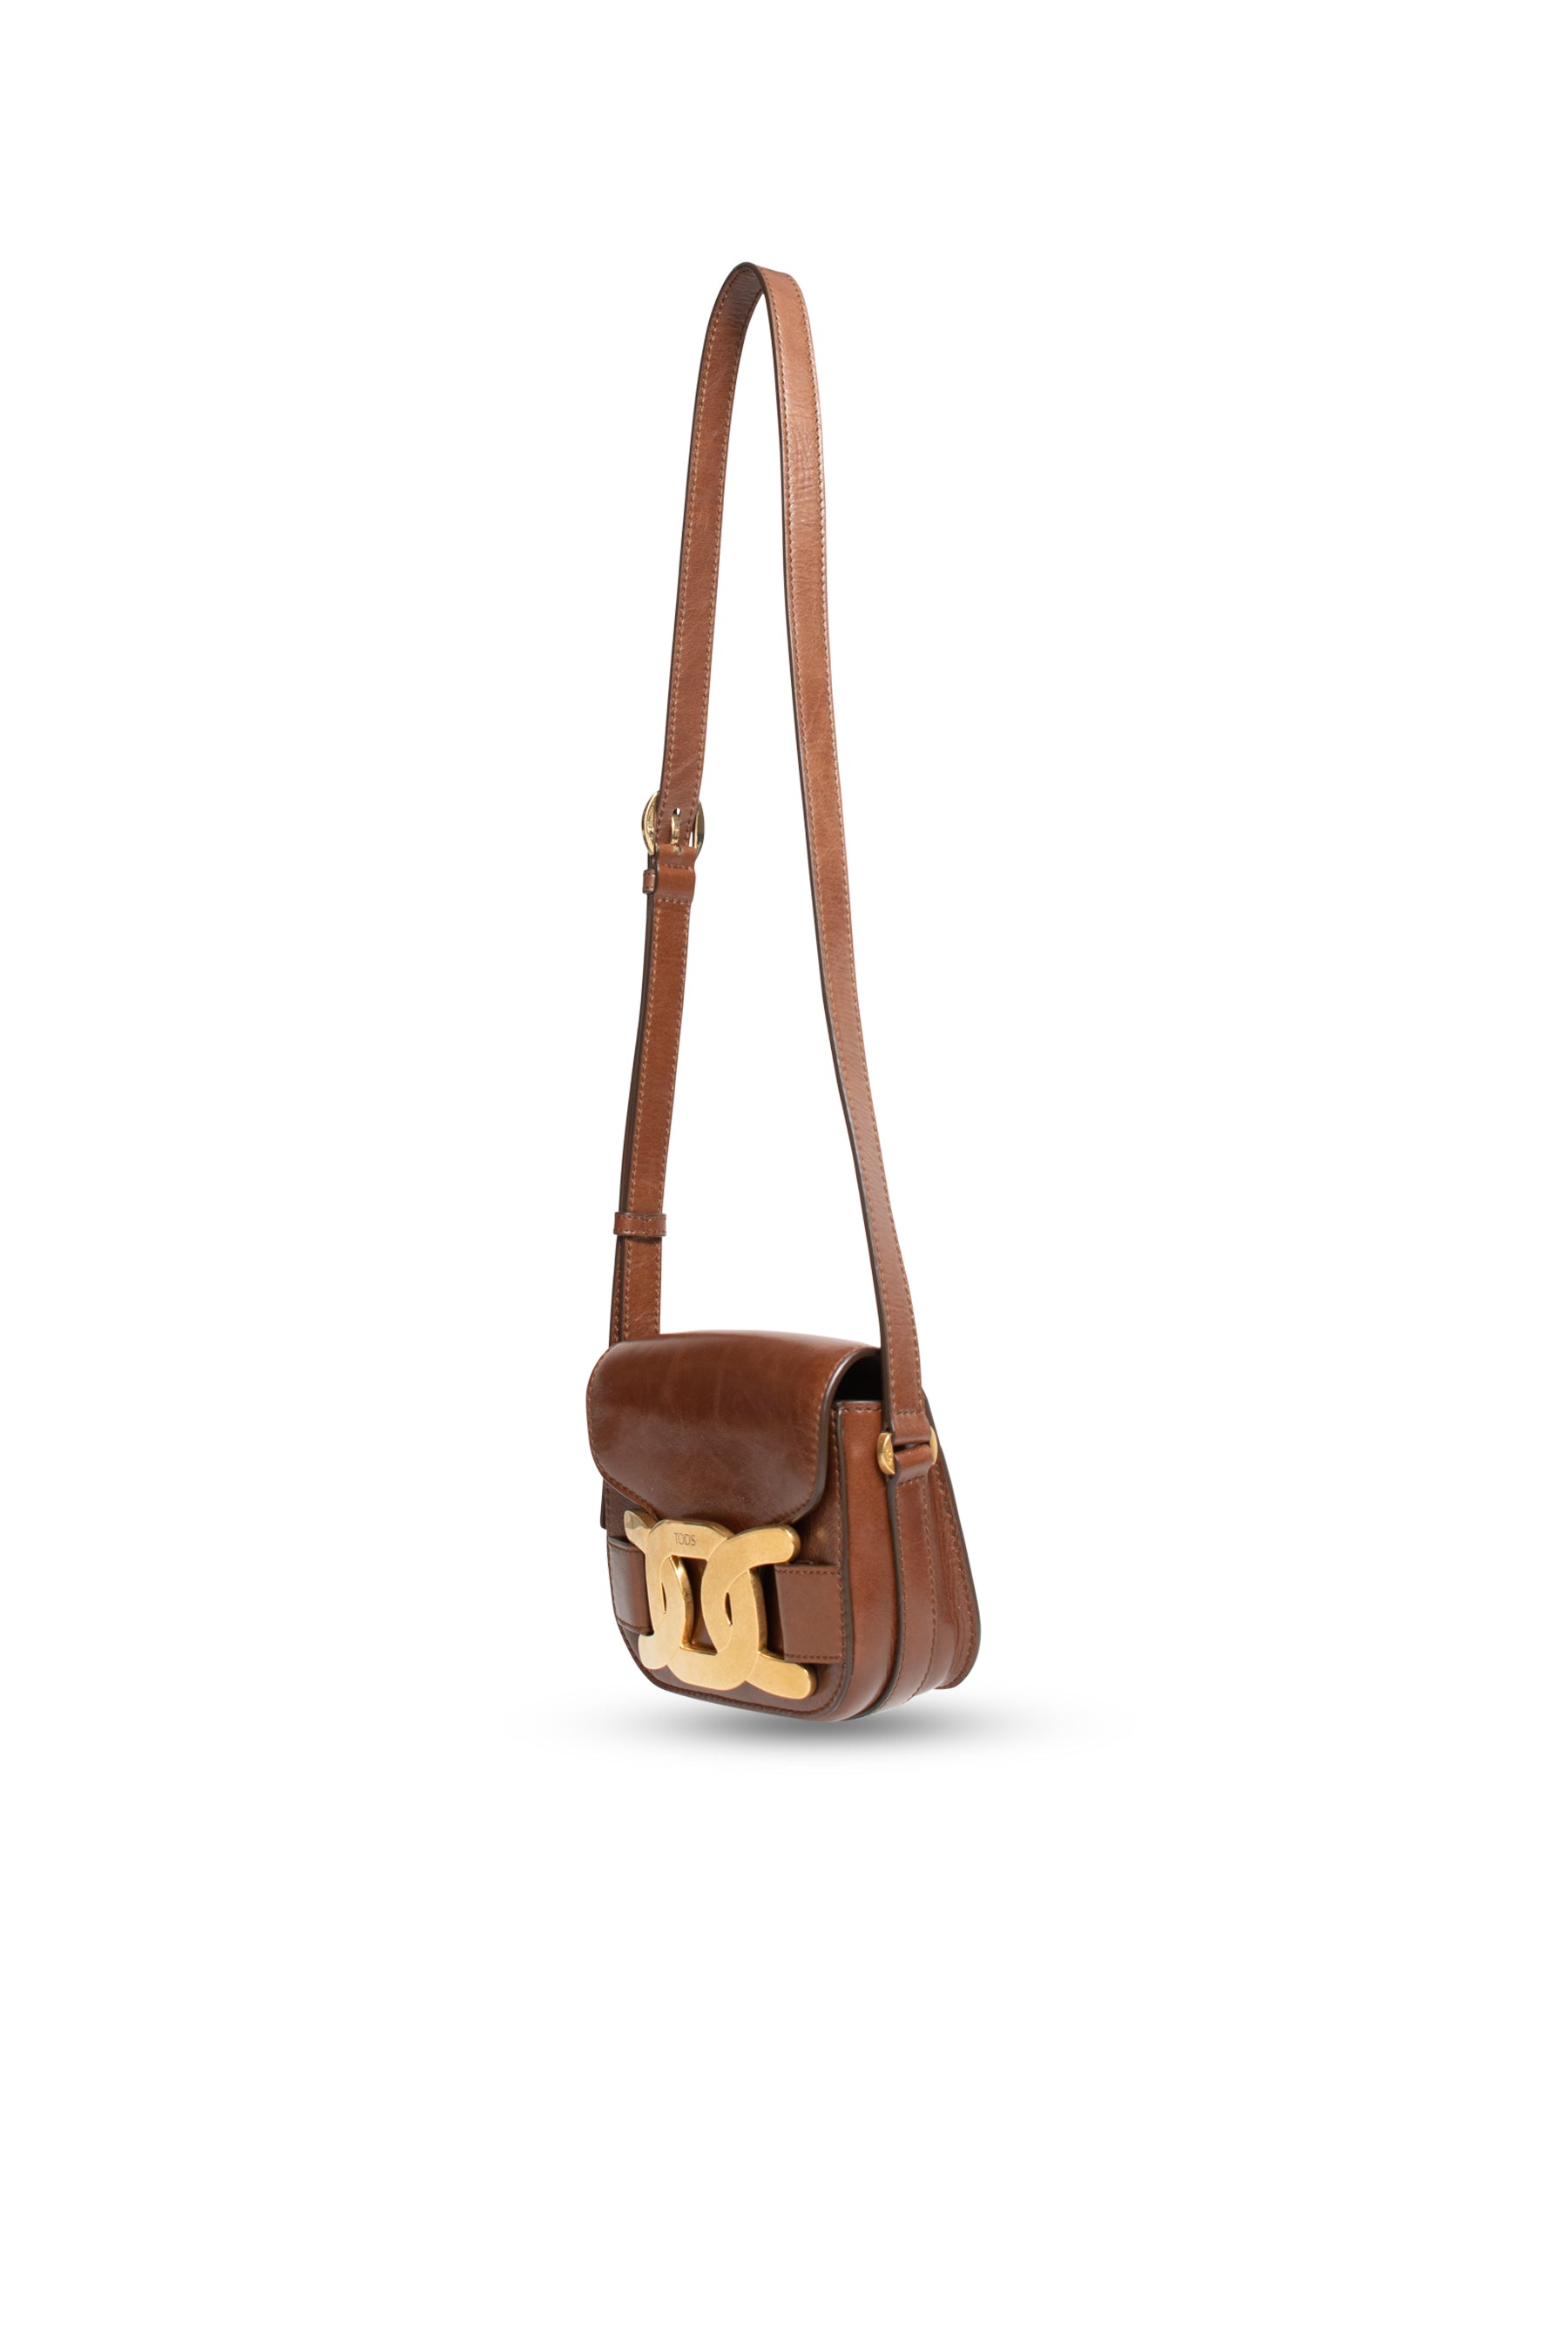 Tod's Embellished Leather Top Handle Bag on SALE